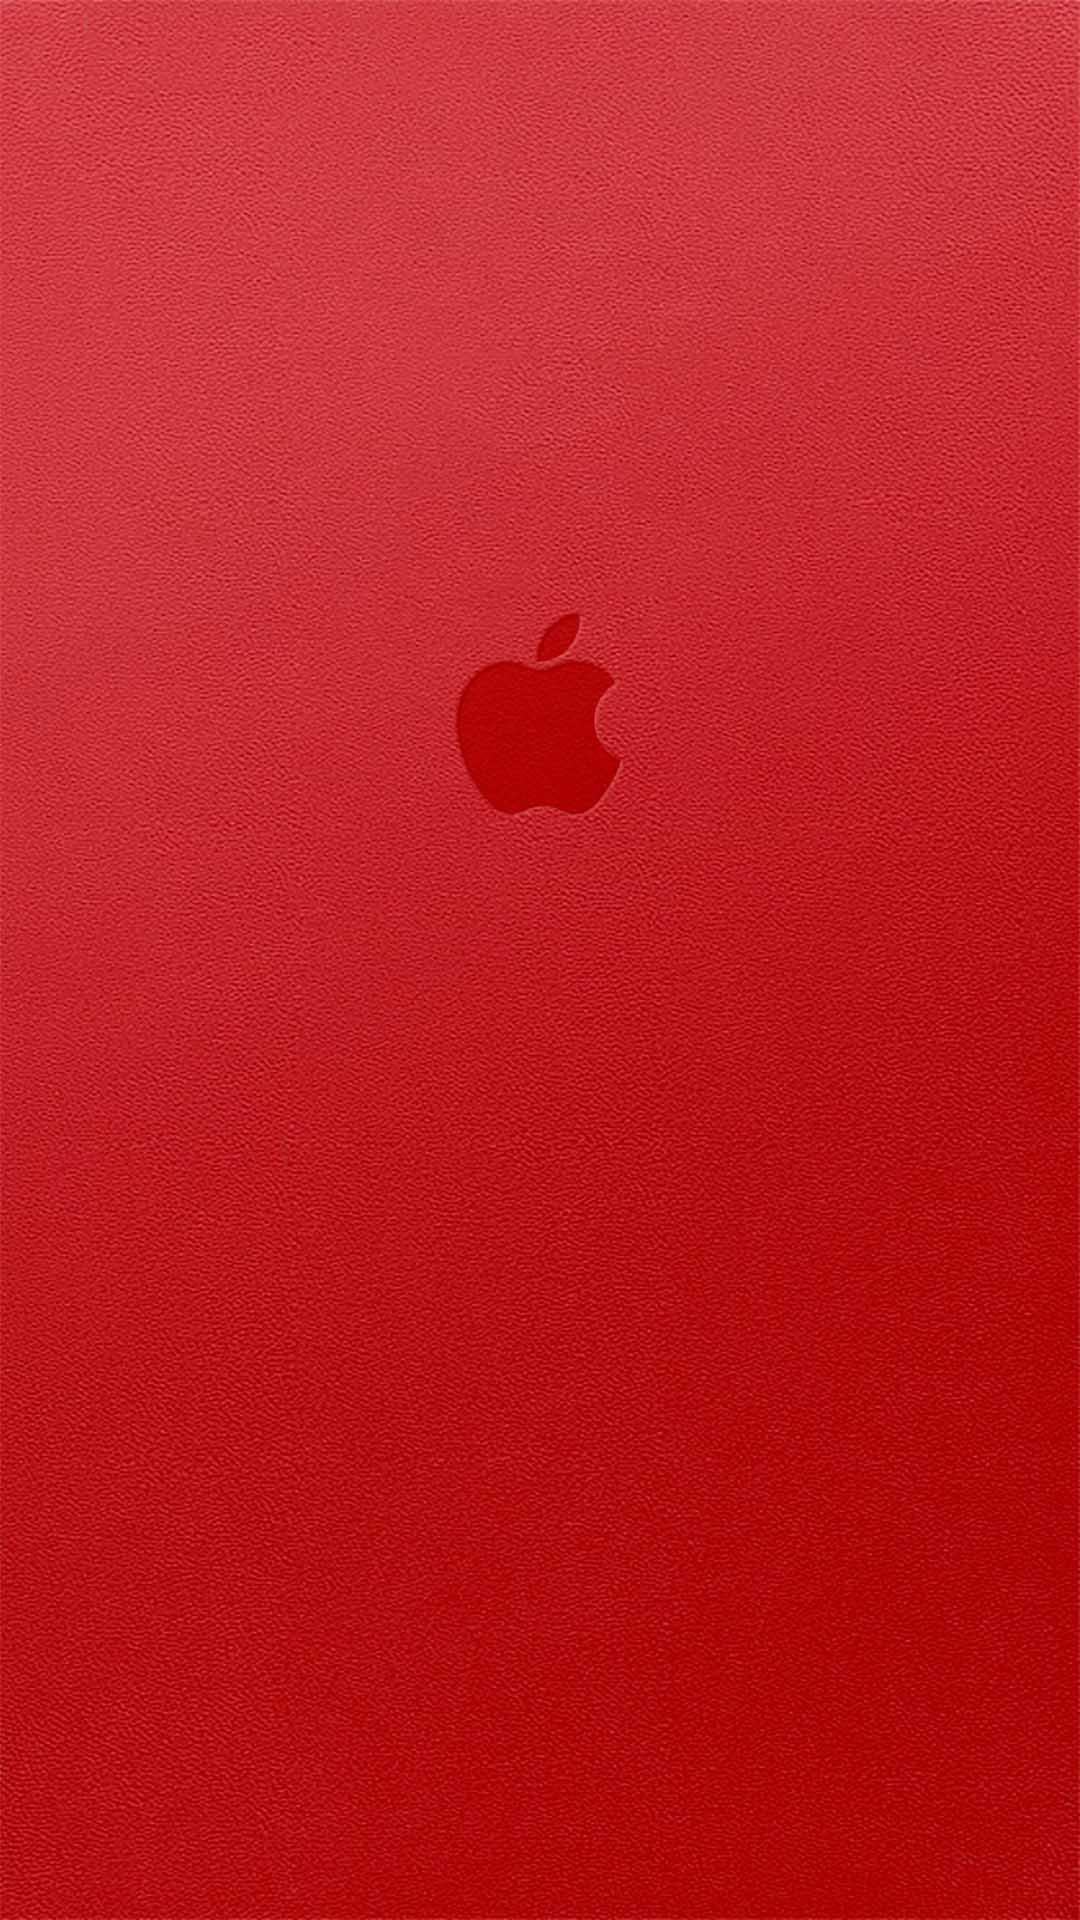 Red シンプルでかっこいいiphone壁紙 Iphone11 スマホ壁紙 待受